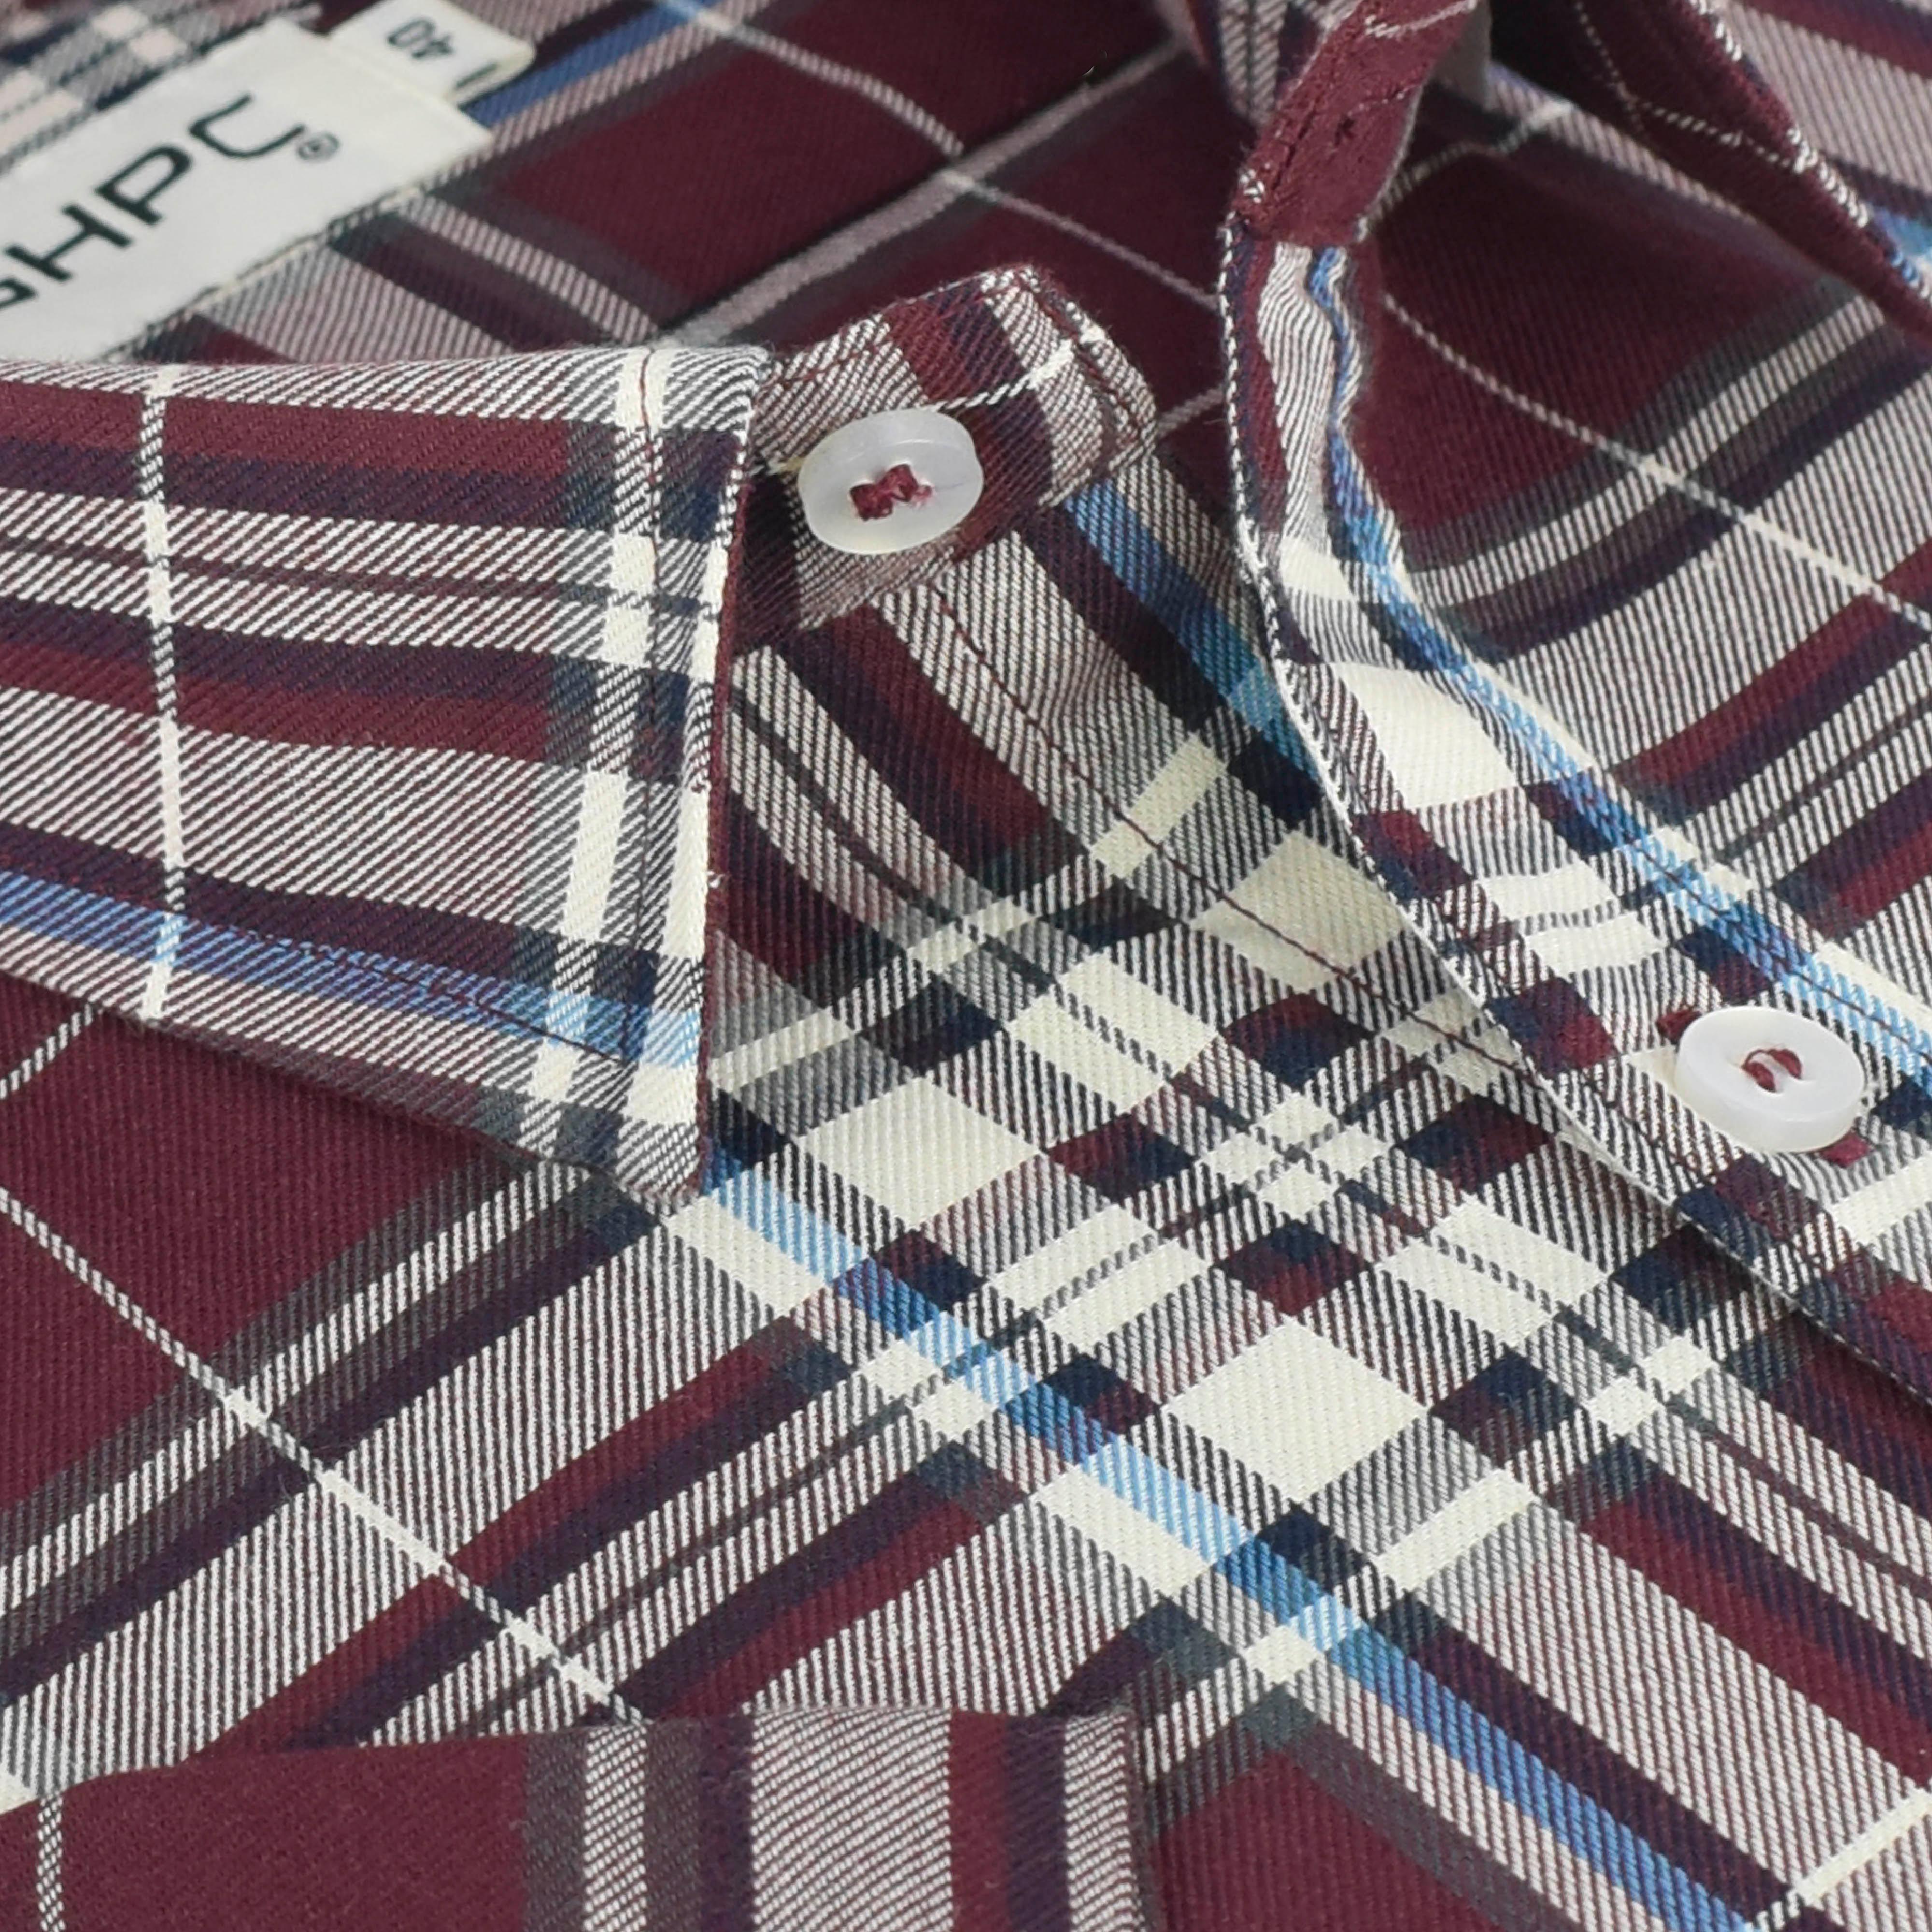 Men's 100% Cotton Madras Checkered Half Sleeves Shirt (Maroon)